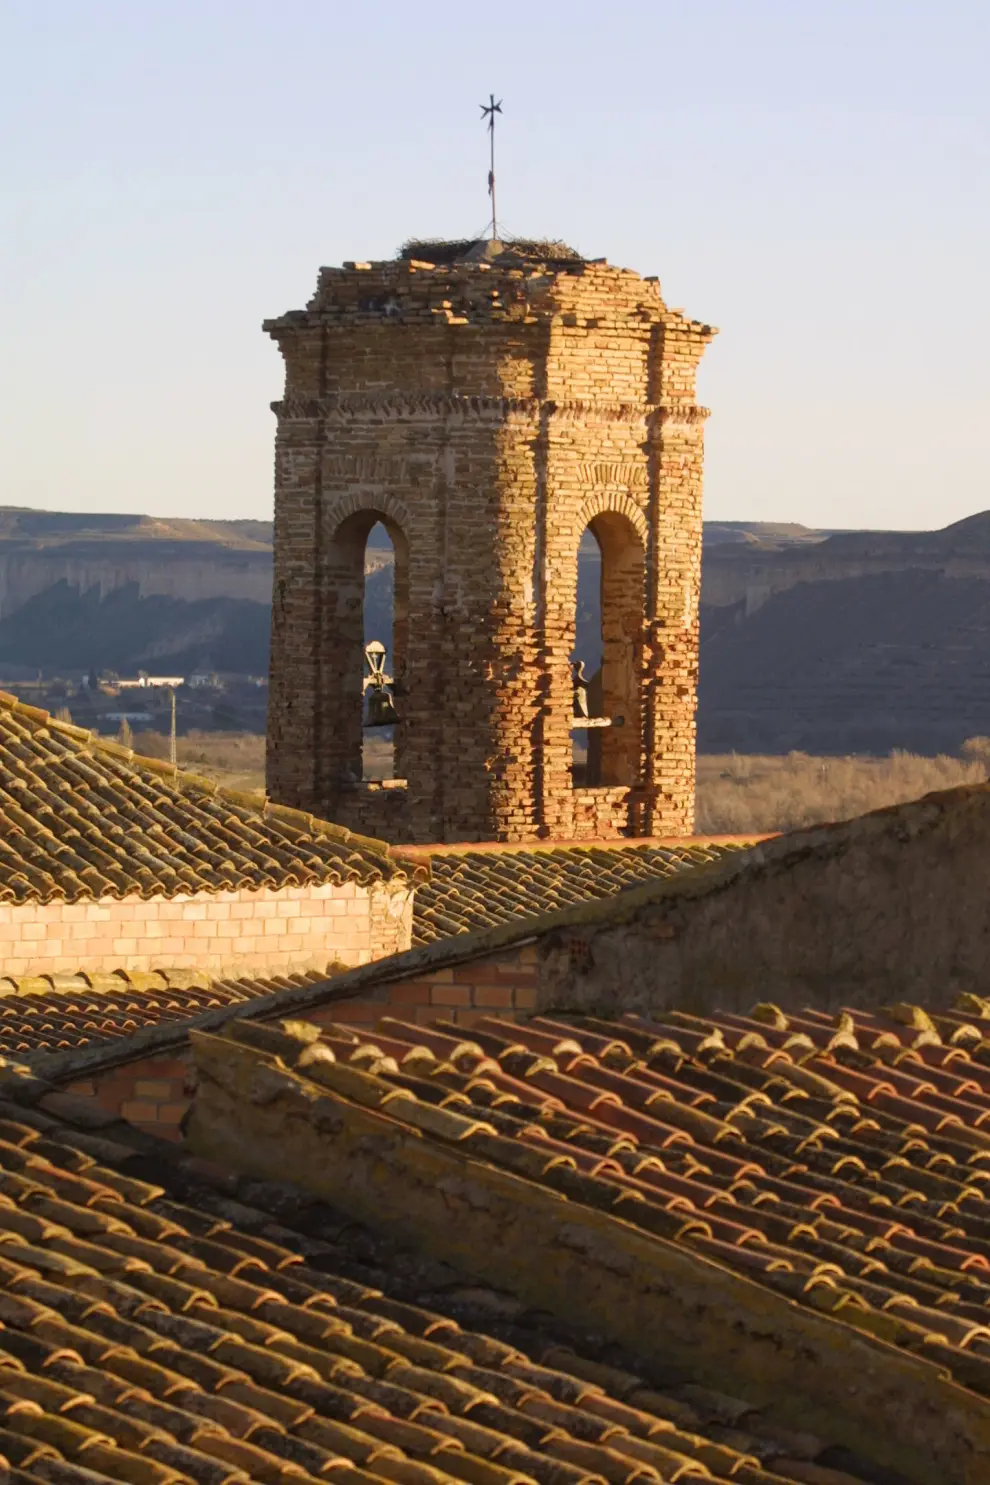 Imágenes de Chalamera en Huesca